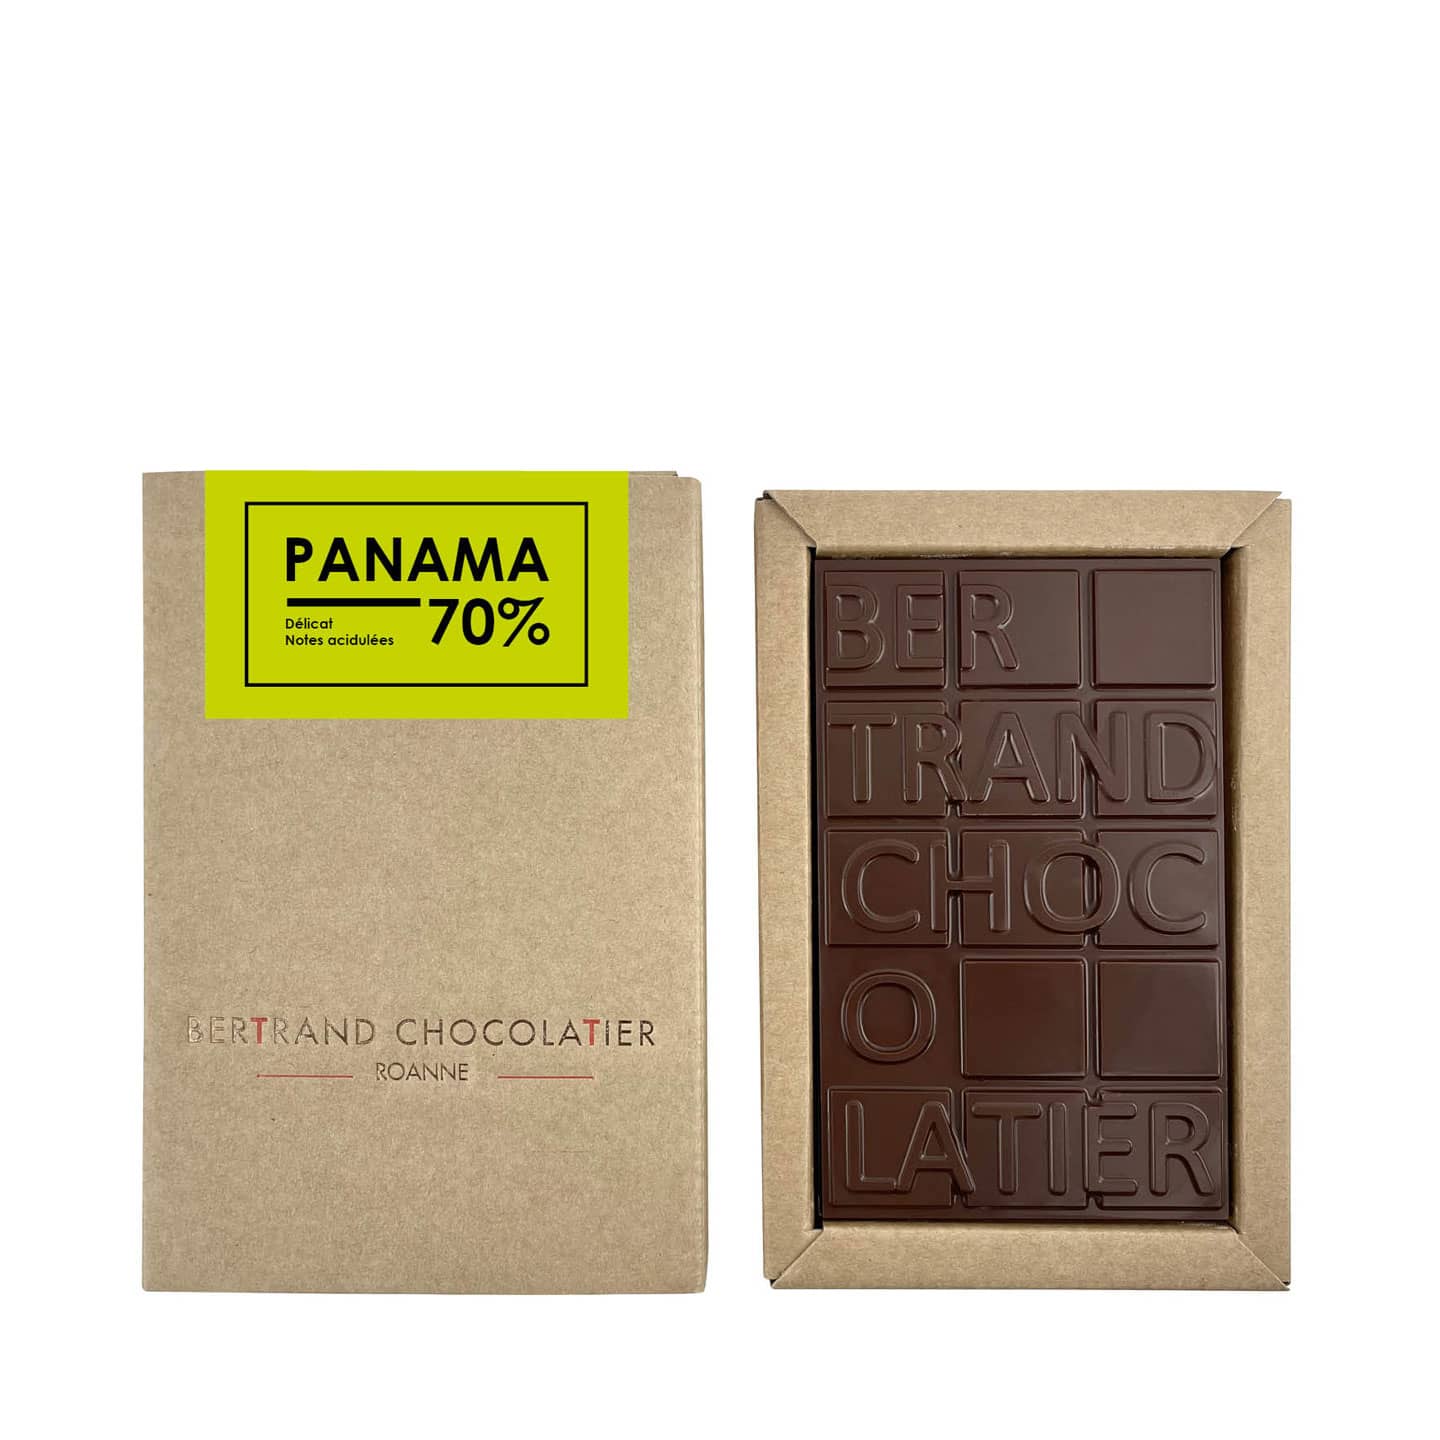 Tablette Noir 70% Grand Cru origine Panama 90g